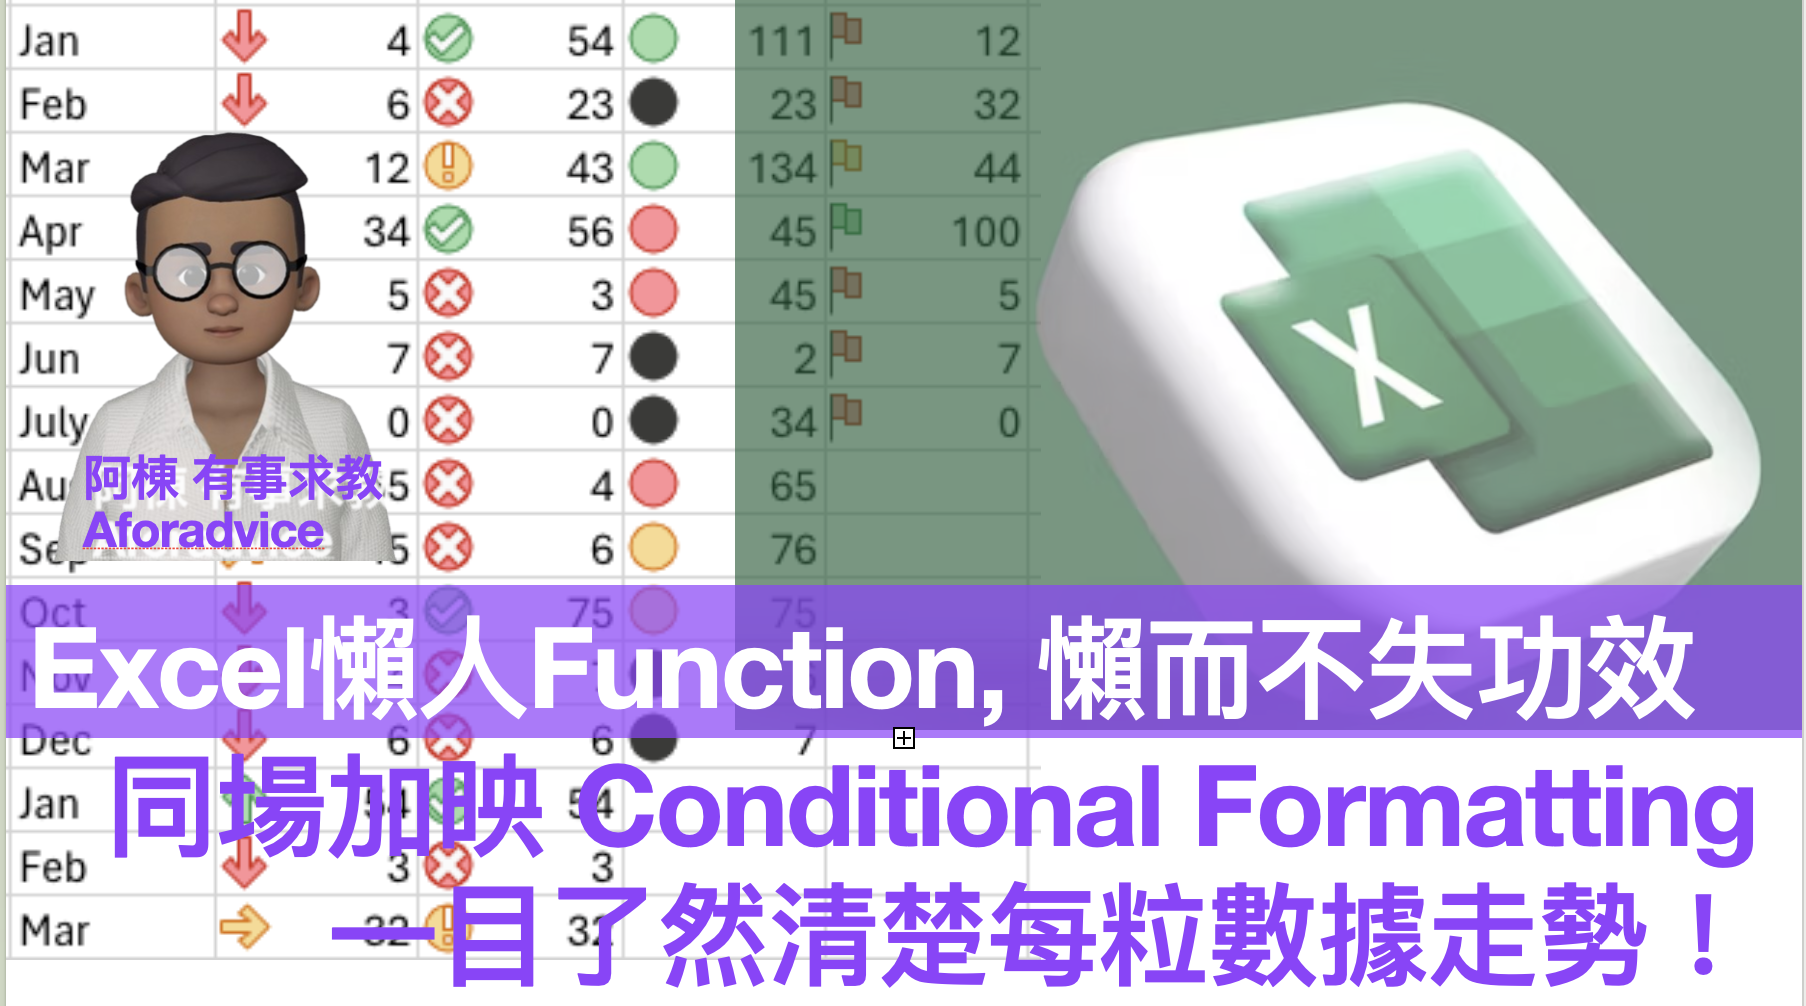 Excel懶人Function, 懶而不失功效, 以後不用逐一表格去加總！同場加映 Conditional Formatting 一目了然清楚每粒數據走勢！